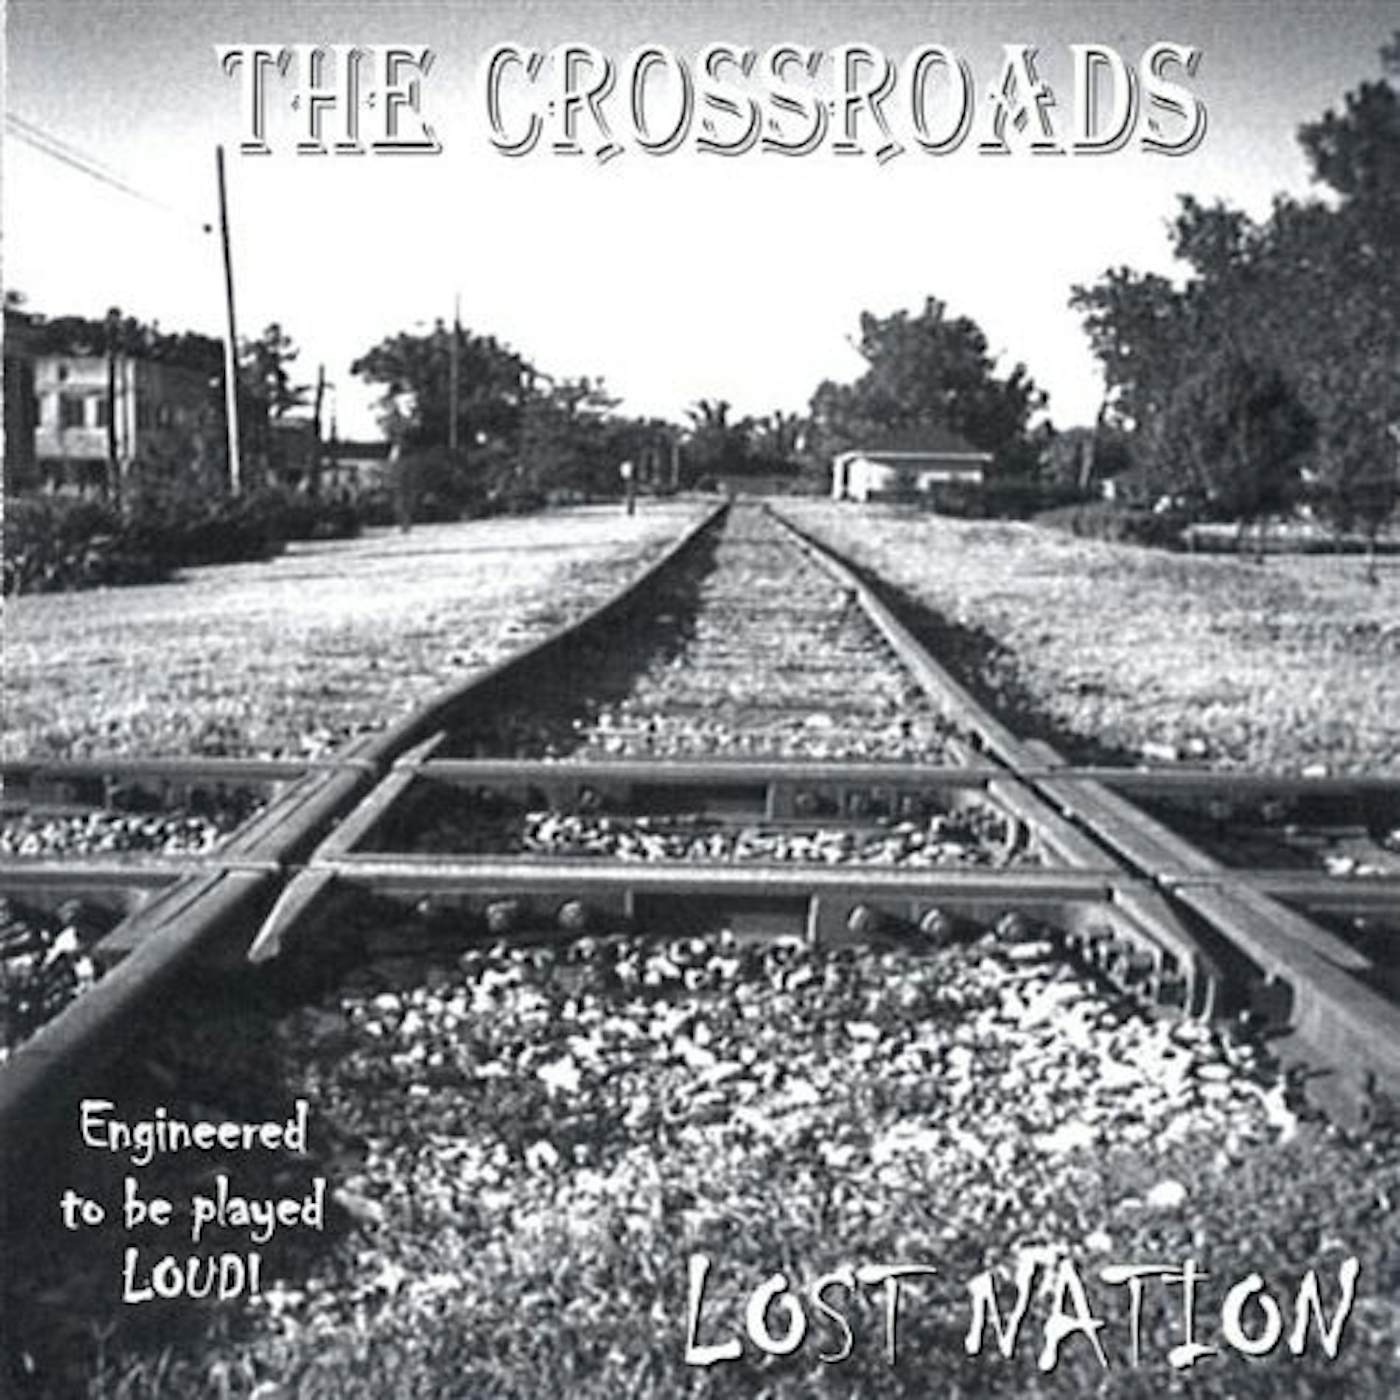 Crossroads LOST NATION CD